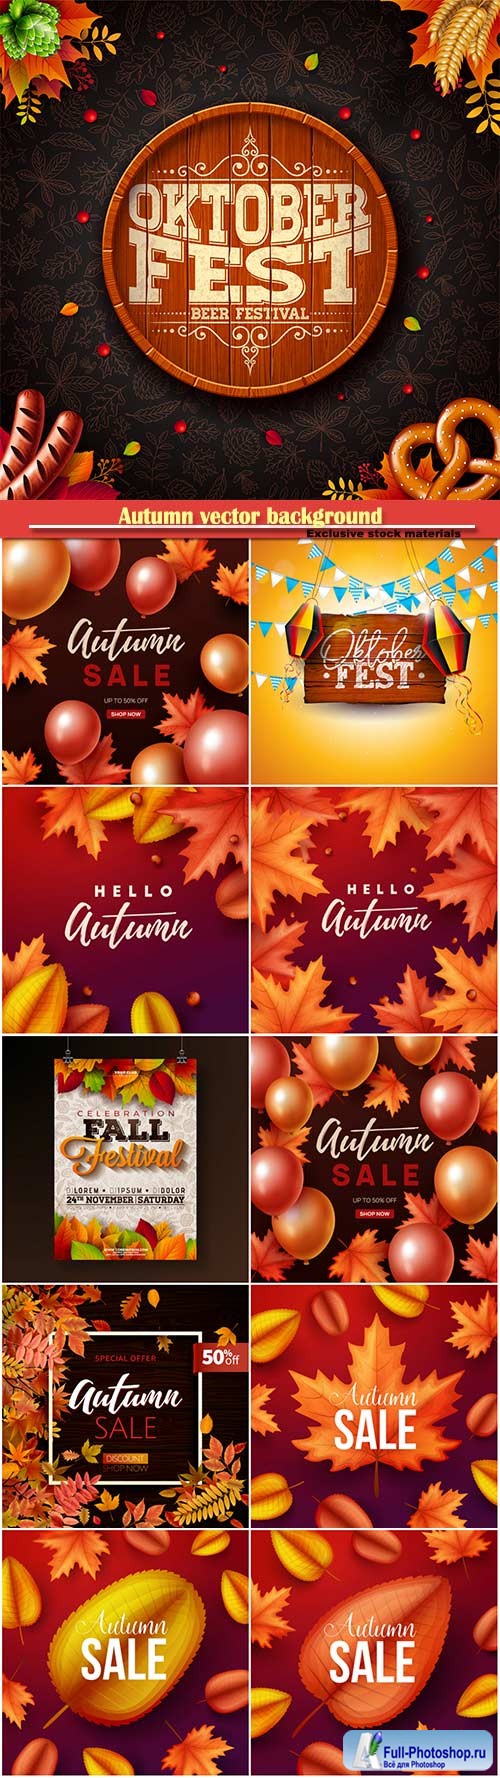 Autumn vector background, party flyer, oktoberfest banner